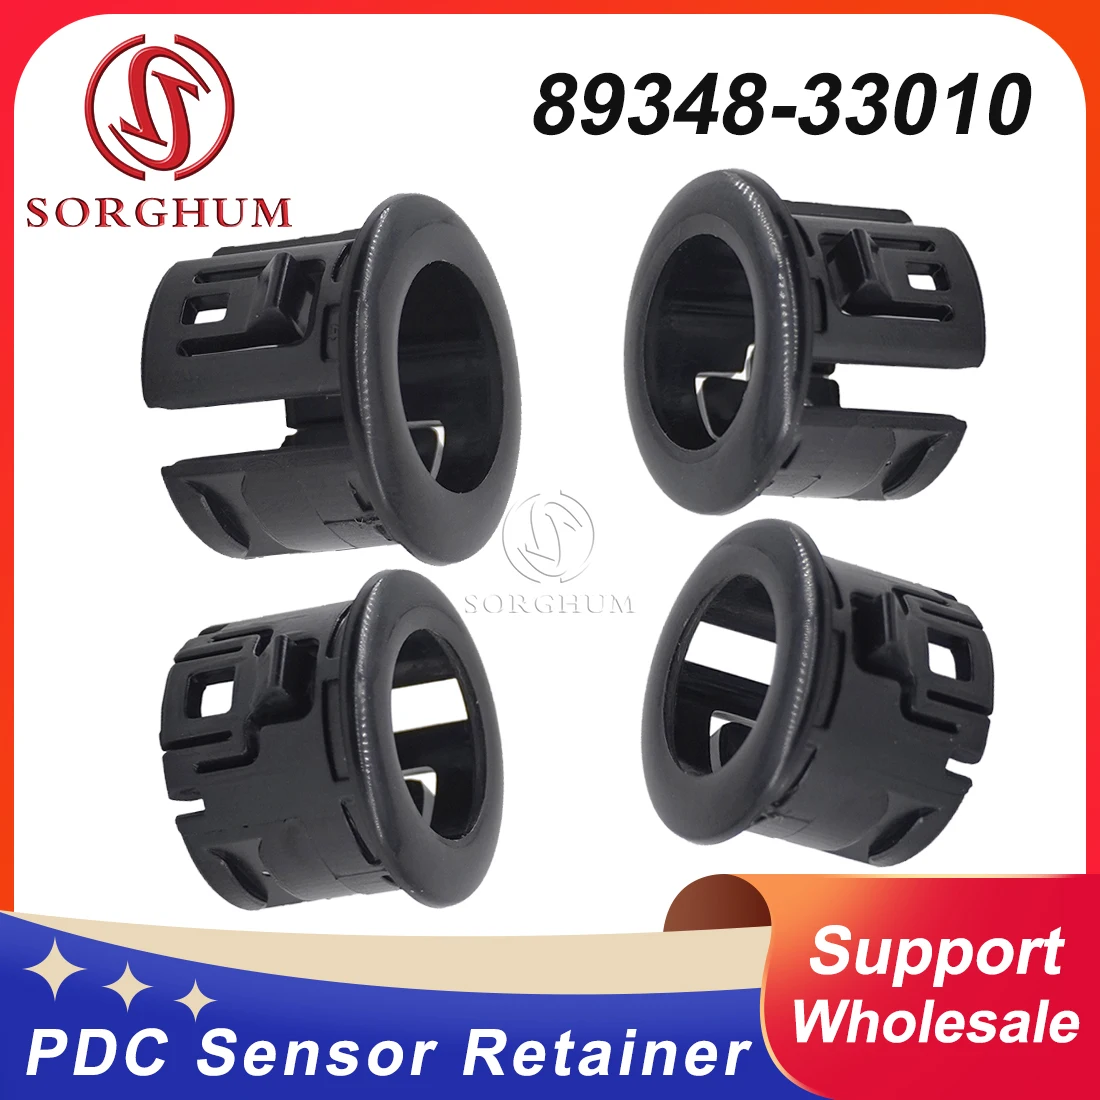 

SORGHUM Bumper Radar Parking Sensor Bracket PDC Parking Sensor Retainer For Toyota Lexus ES350 HS250h 89348-33010 8934833010